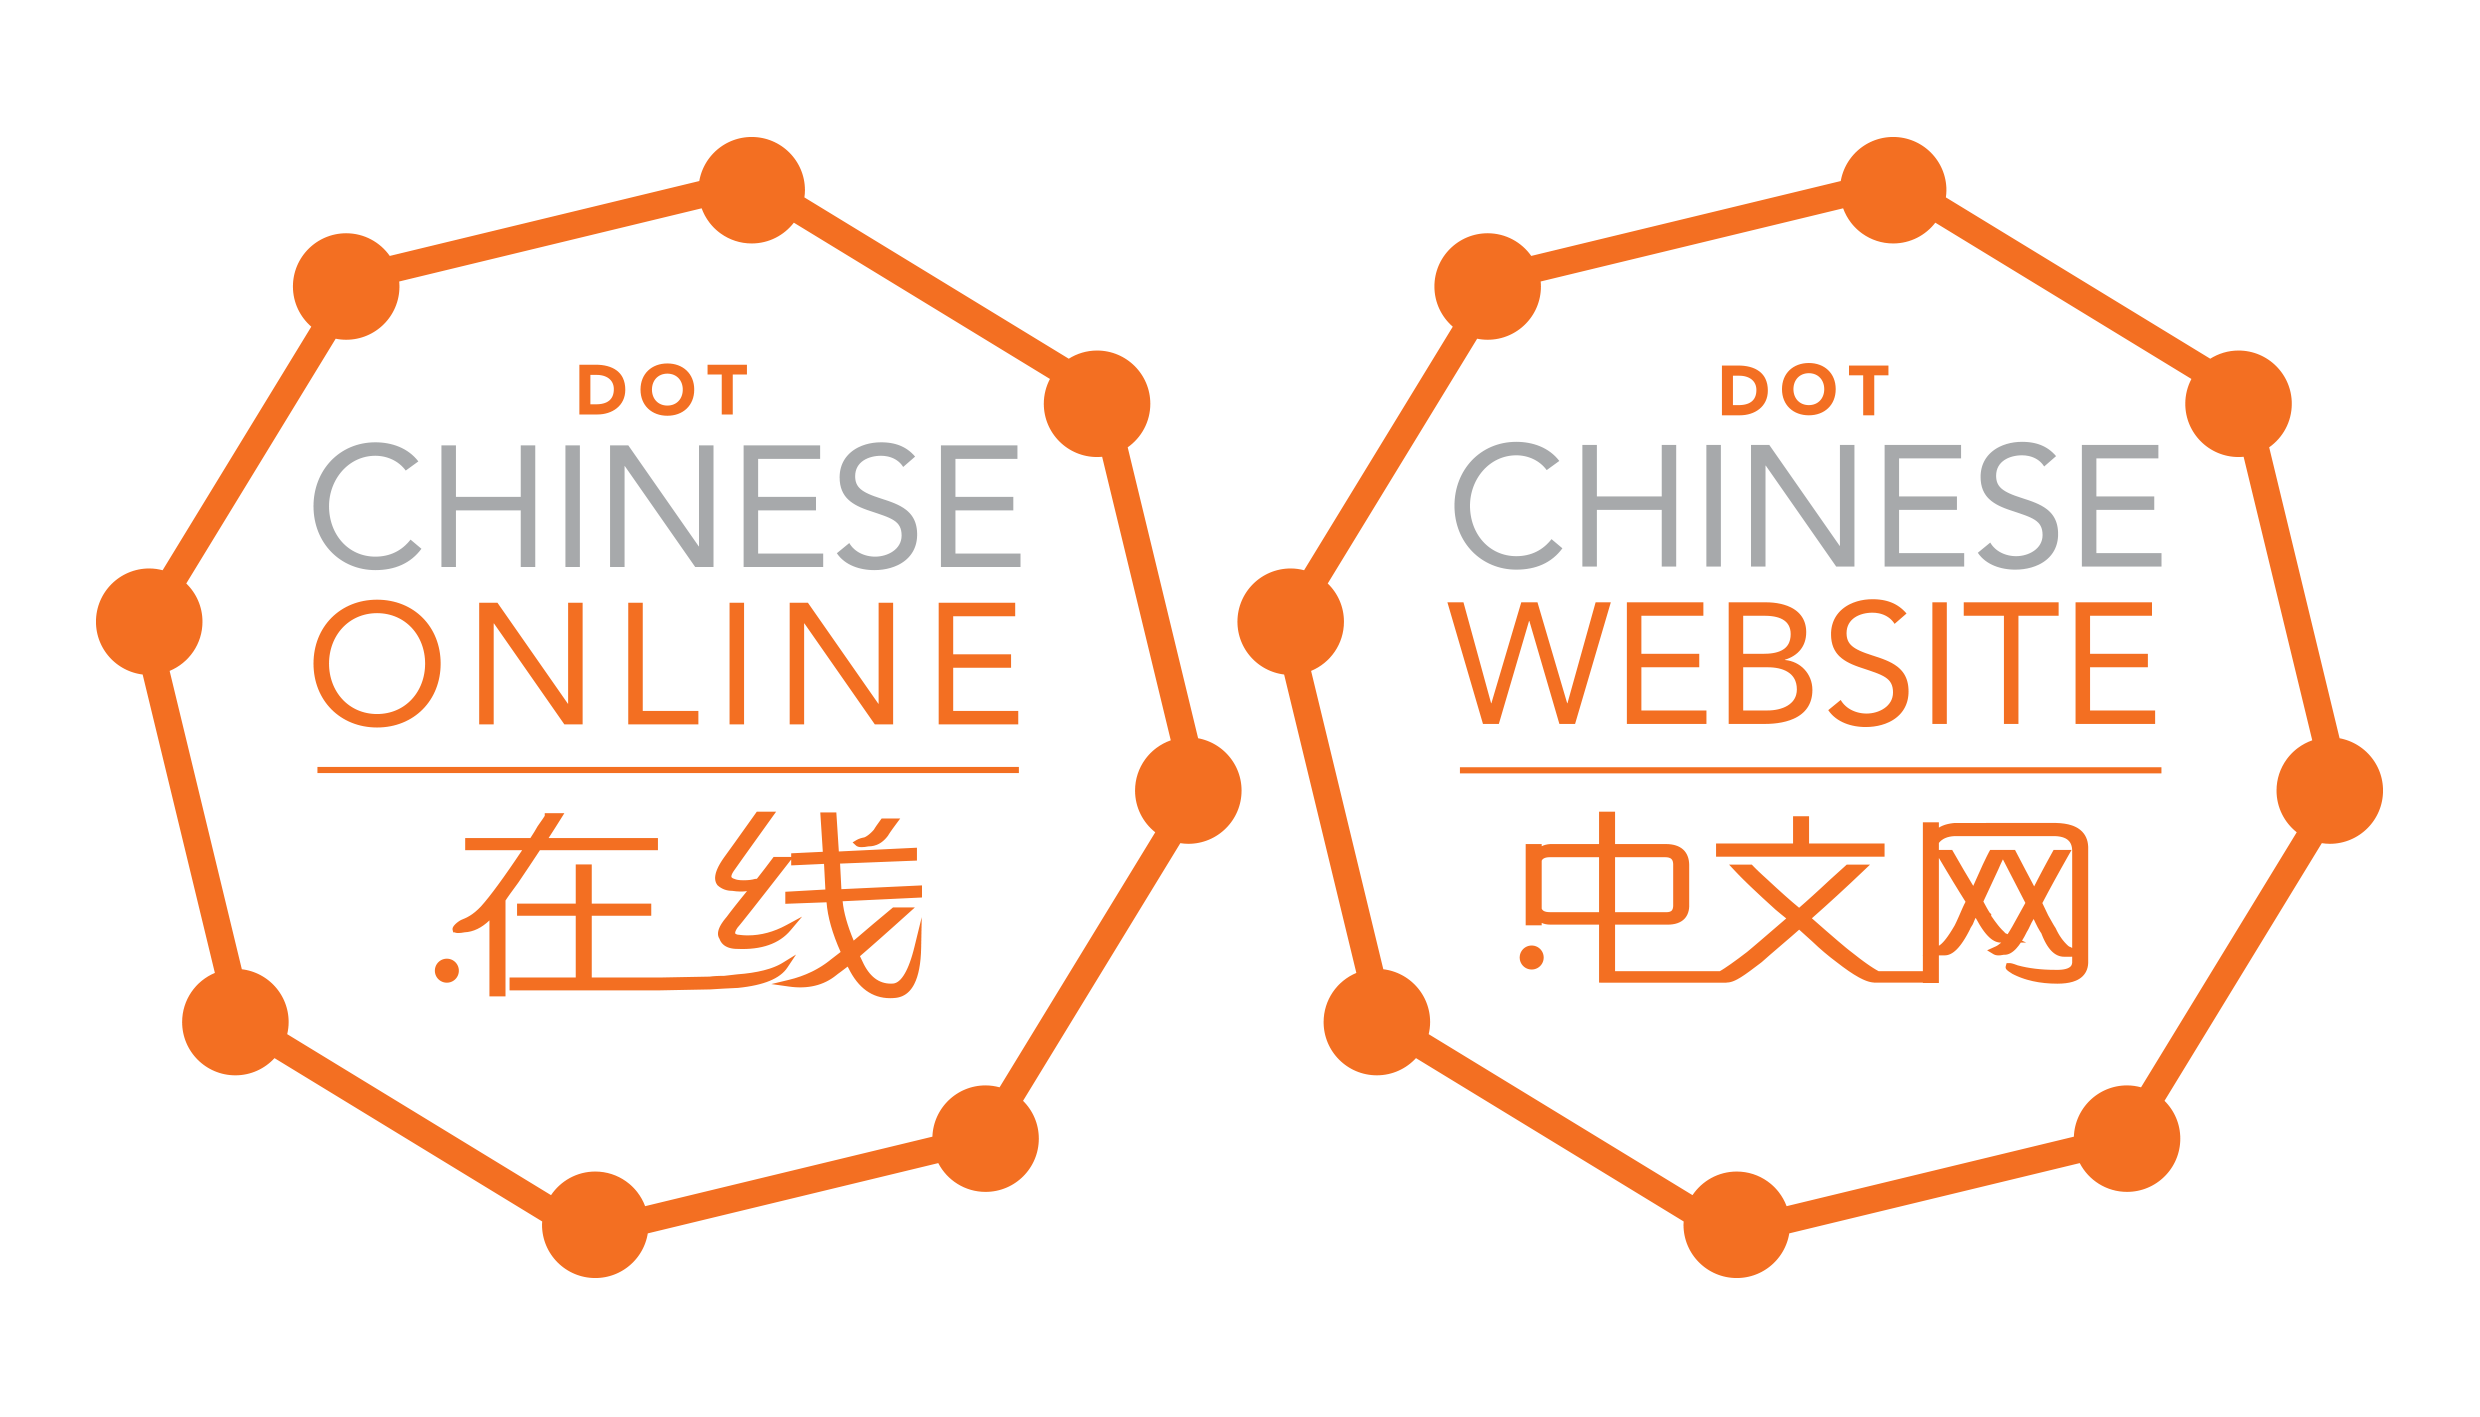 Китайские домены. Chinese website. Домены китайцев. Китайский домен сайтов. Китайский домен